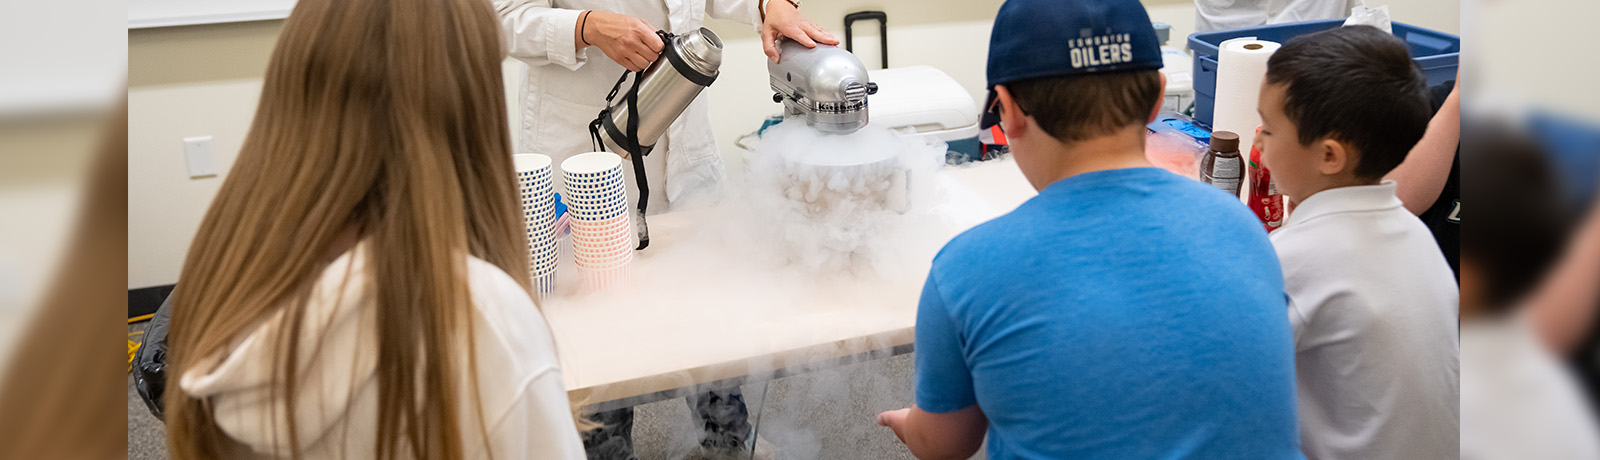 Student crowd around a mixer making ice cream with liquid nitrogen